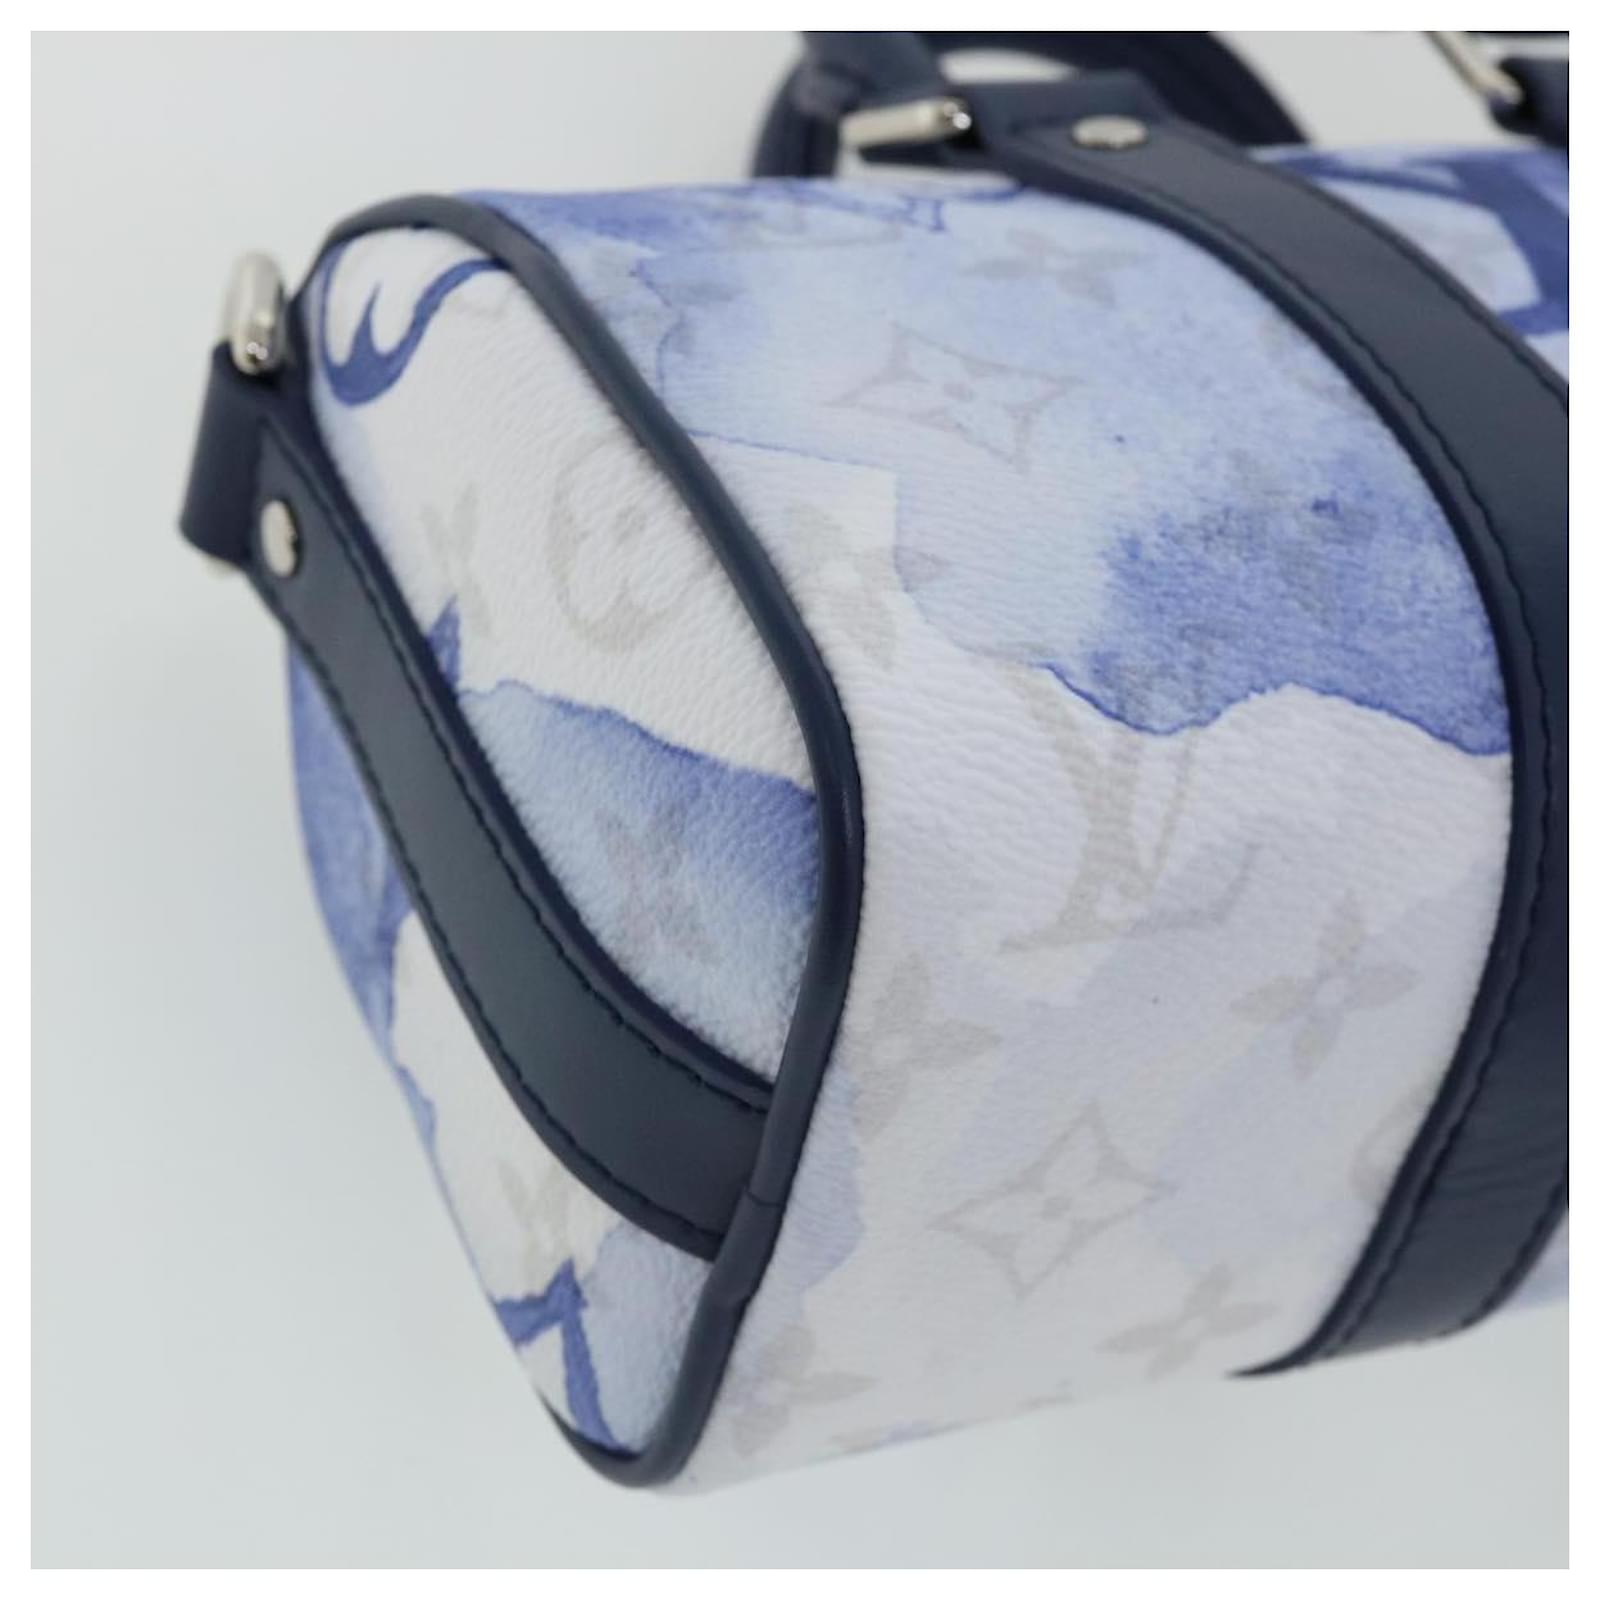 Louis Vuitton Keepall Bandouliere XS Duffle Bag Blue Watercolor M45761